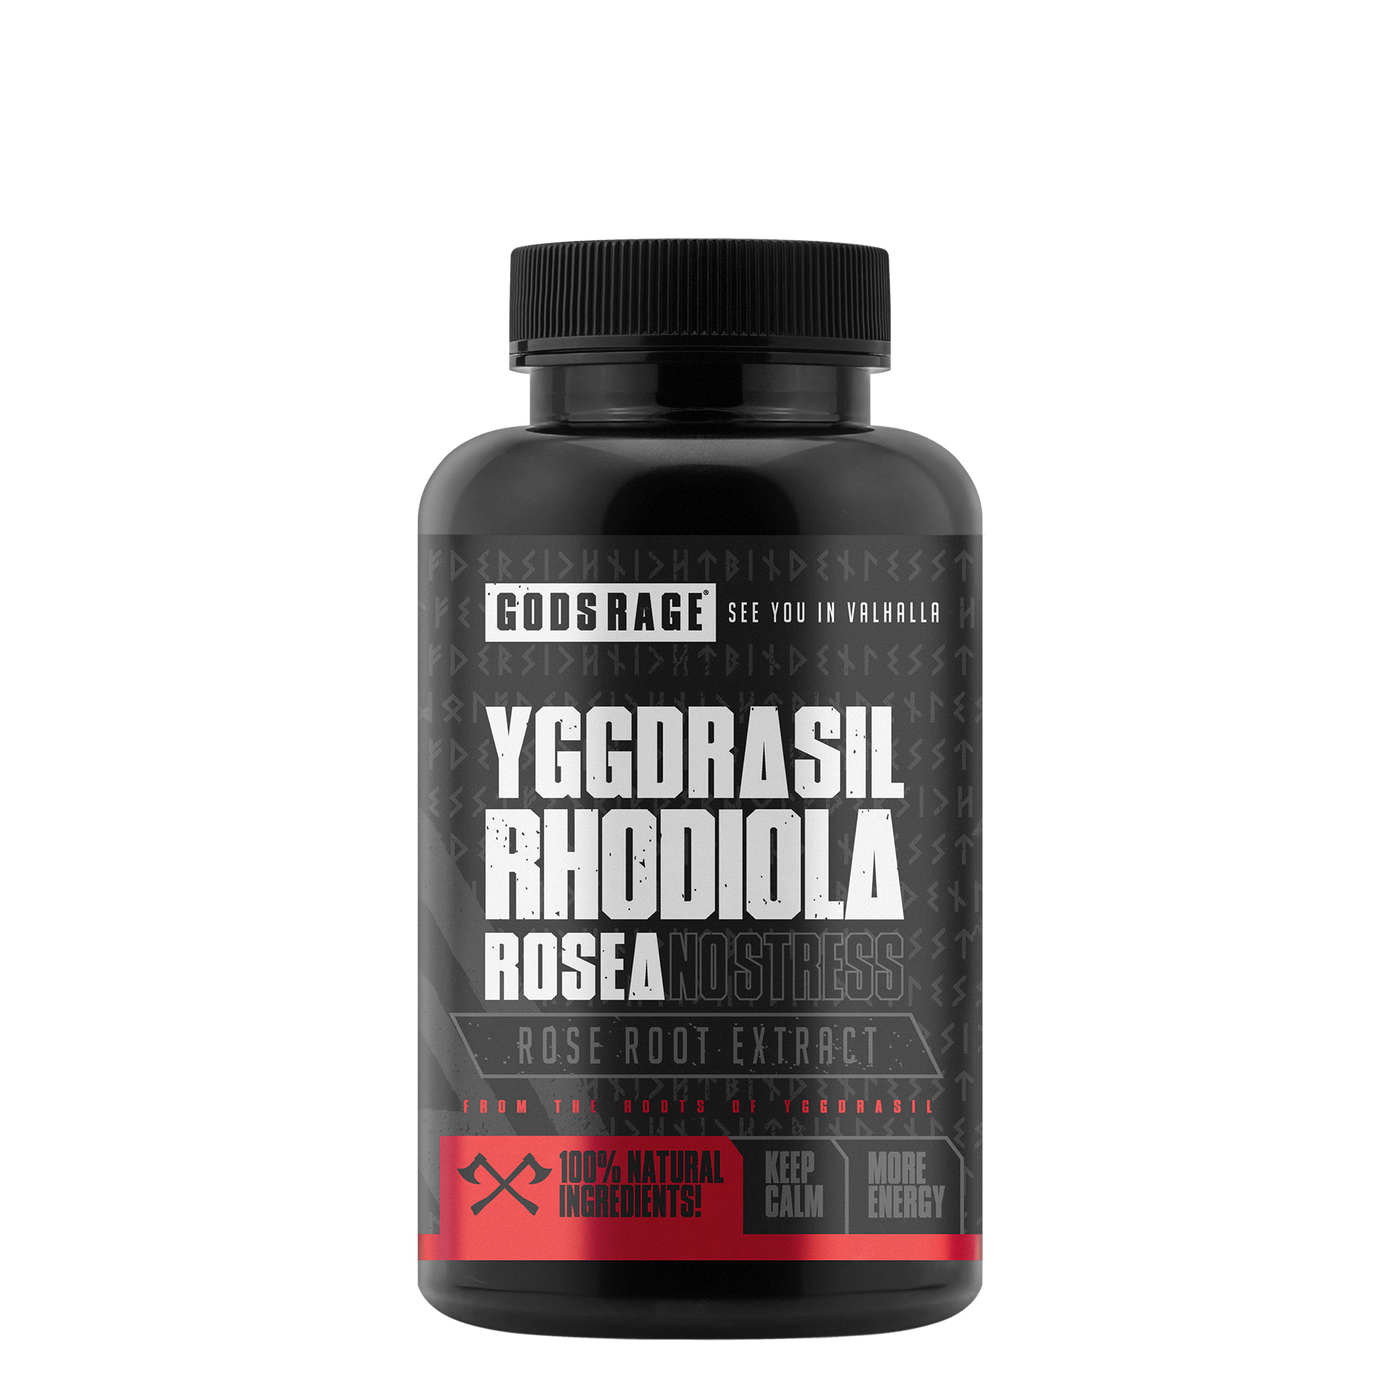 Yggdrasil Rhodiola Rosea Gods Rage 120 Capsules